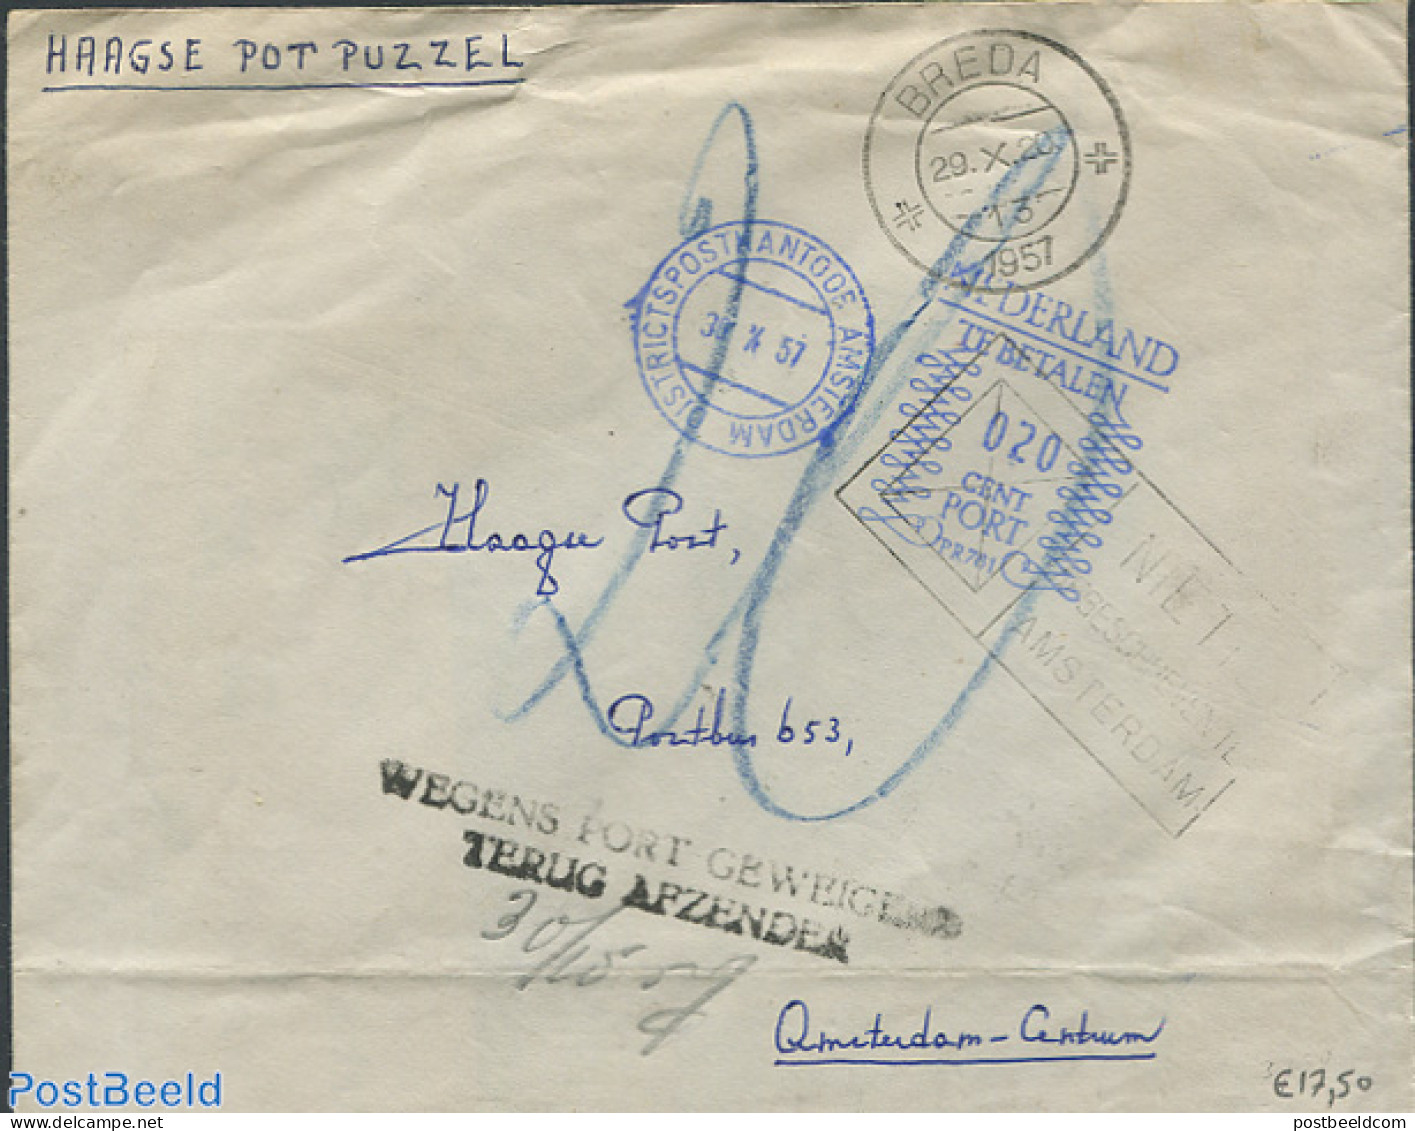 Netherlands 1957 Envelope From The Hague To Amsterdam,via Breda. Postage Due 20 Cent., Postal History - Briefe U. Dokumente